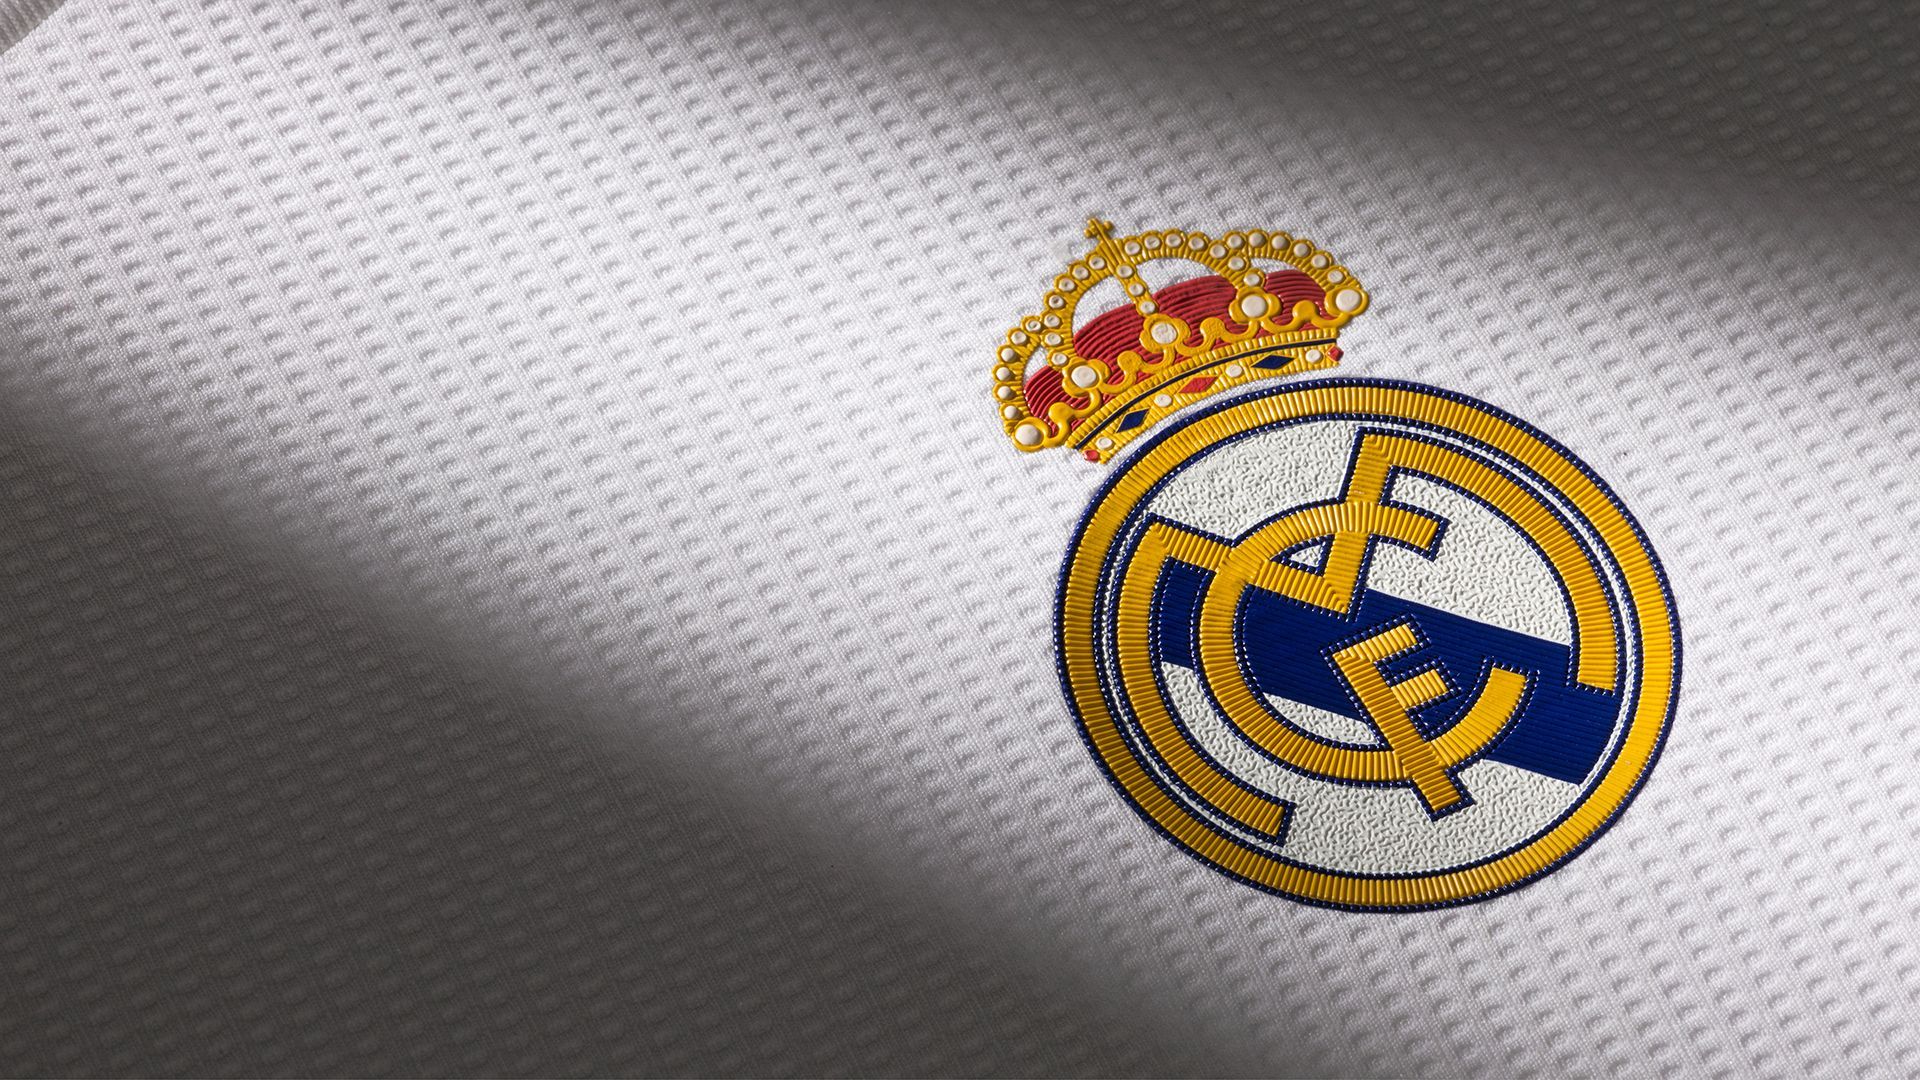 Real Madrid Poster Wallpaper HD. Real madrid logo wallpaper, Real madrid wallpaper, Madrid wallpaper